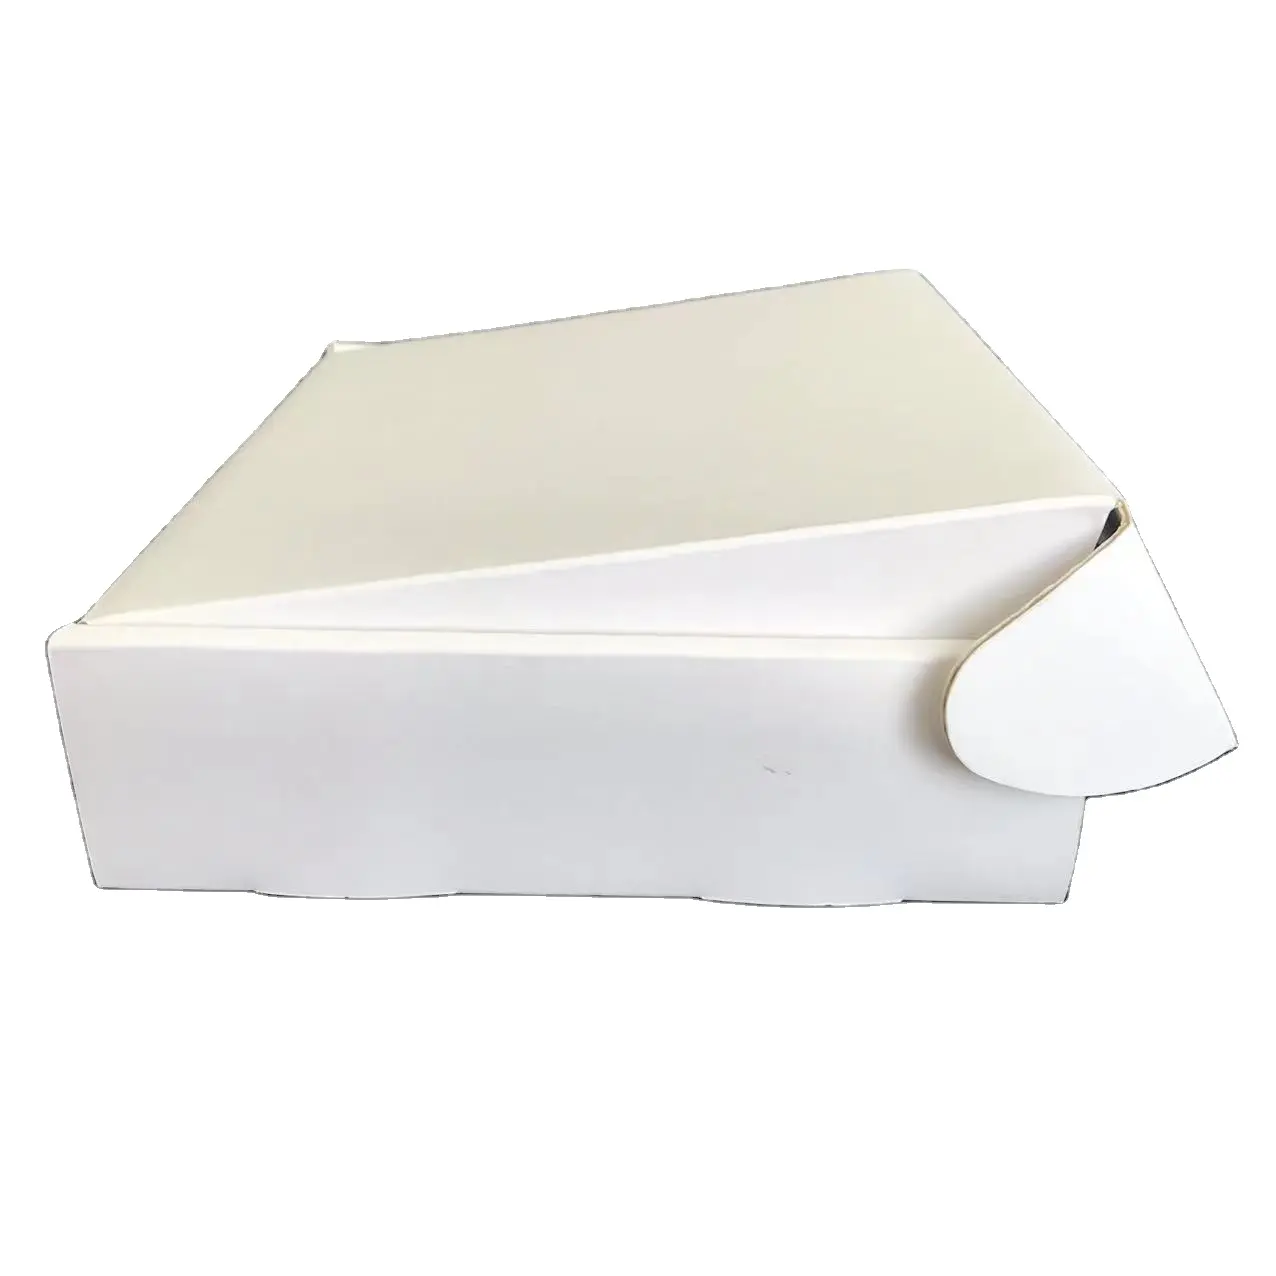 थोक तह कागज बॉक्स customizaion परिधान उपहार बाहरी पैकेजिंग recyclable अंडरवियर बॉक्स कॉस्मेटिक कागज बक्से